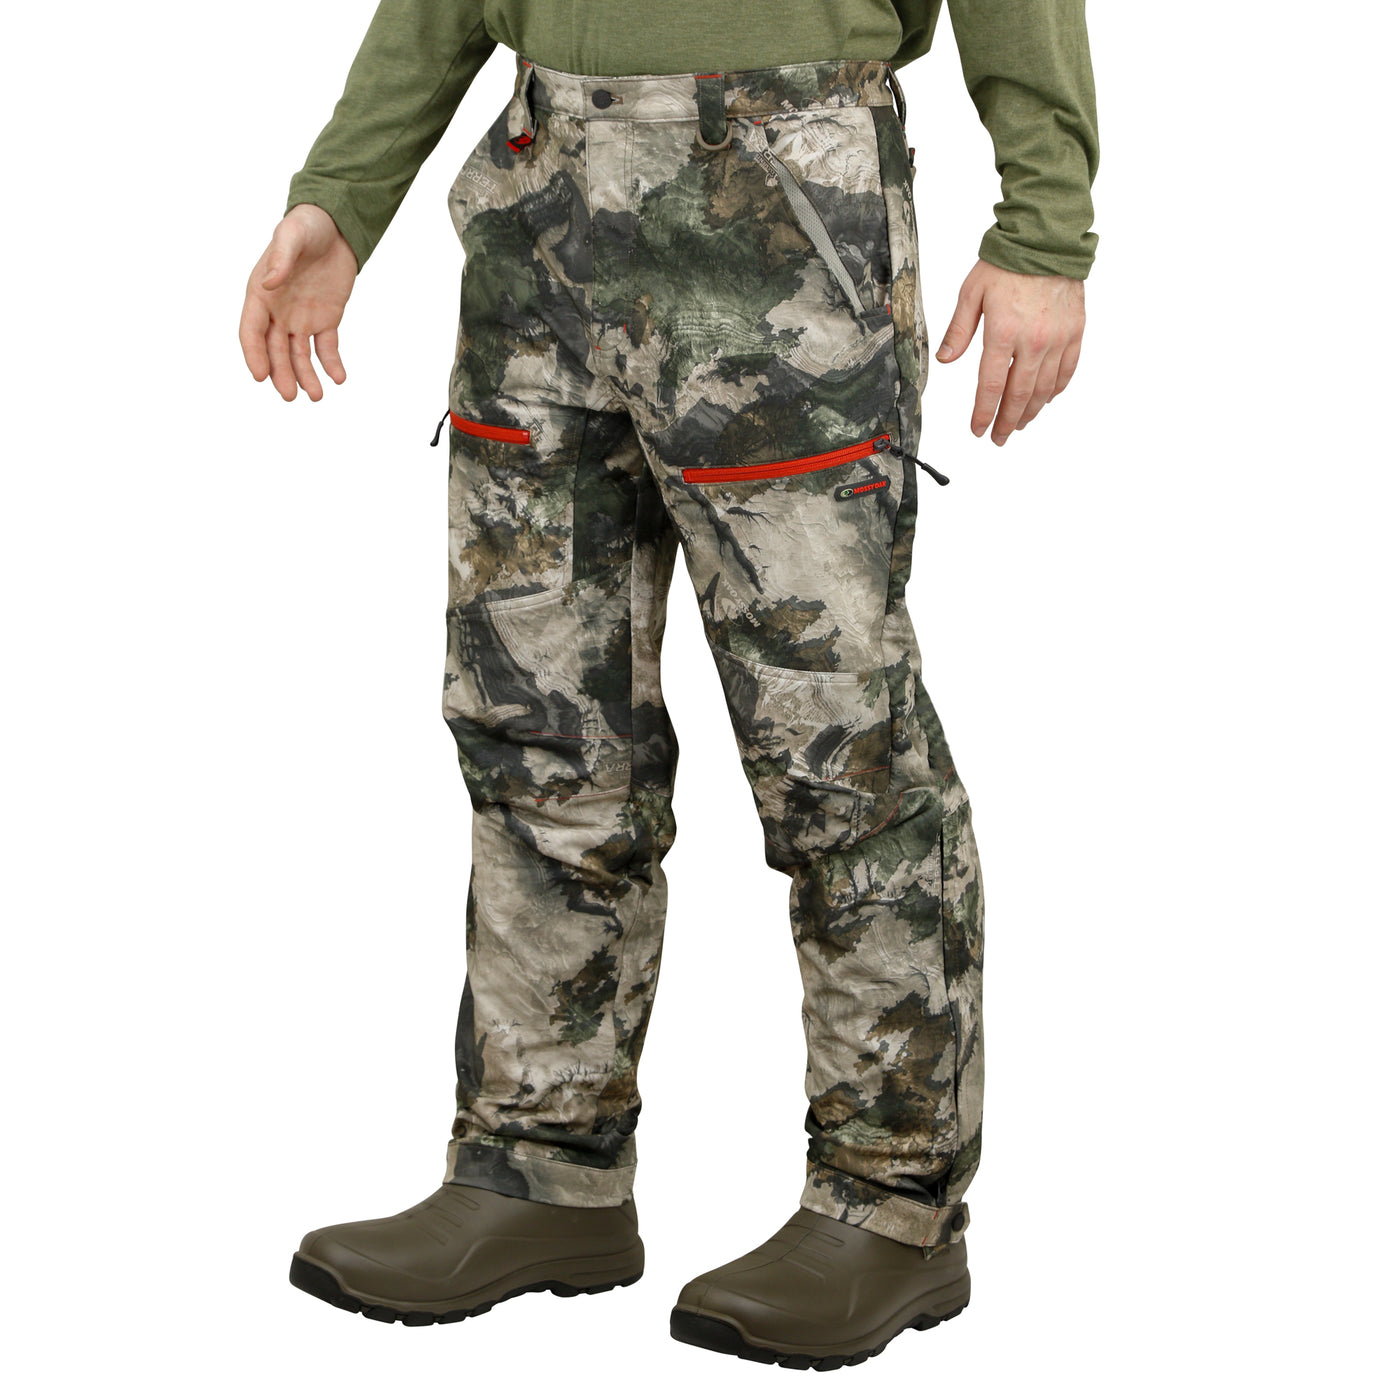 Tracker Lightweight Hunting Pants for Men Early Season